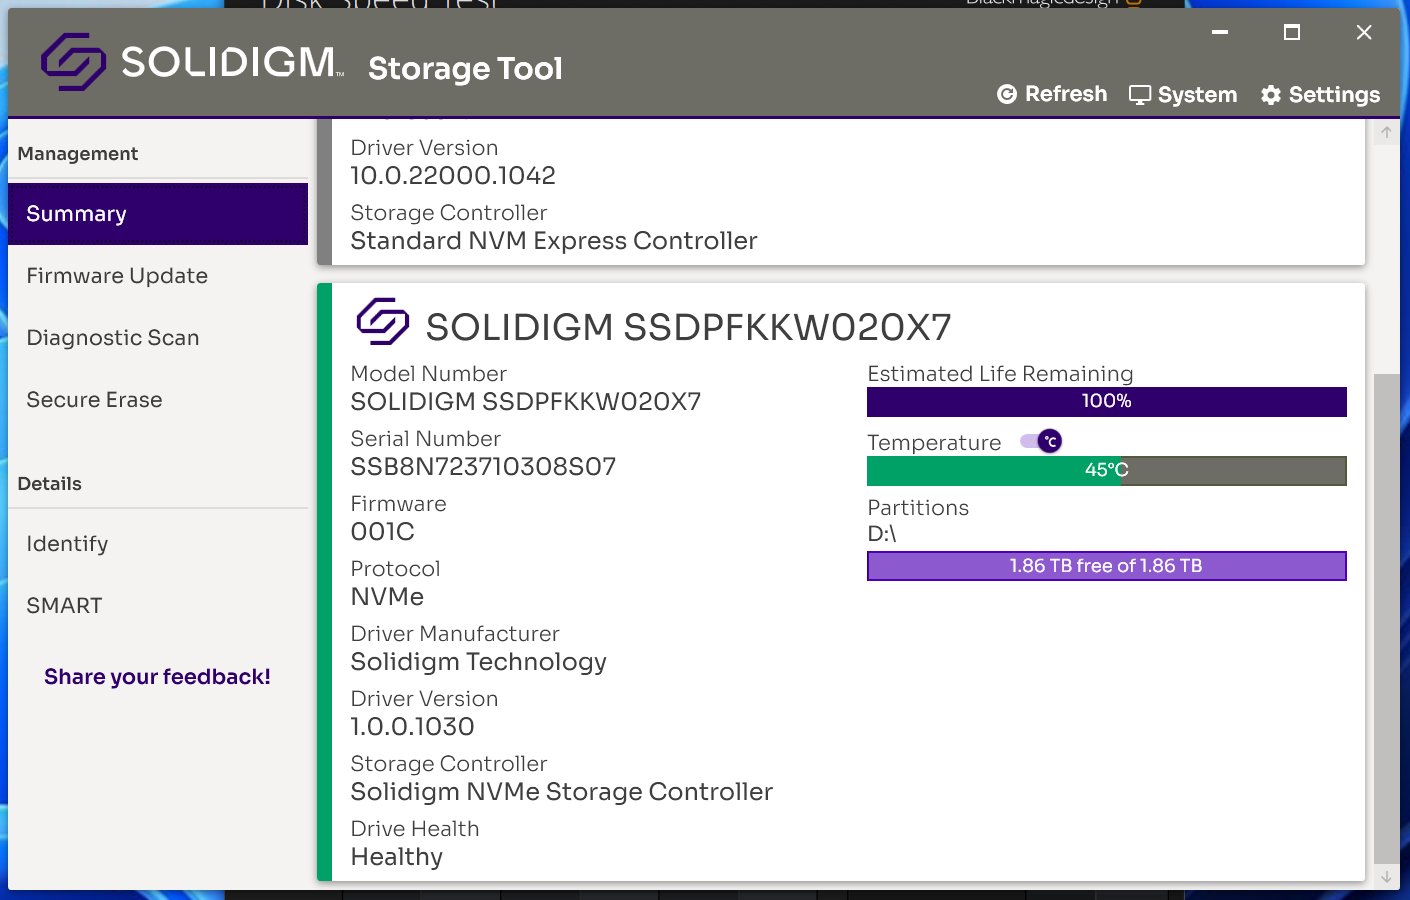 Solidigm P44 Pro storage tool